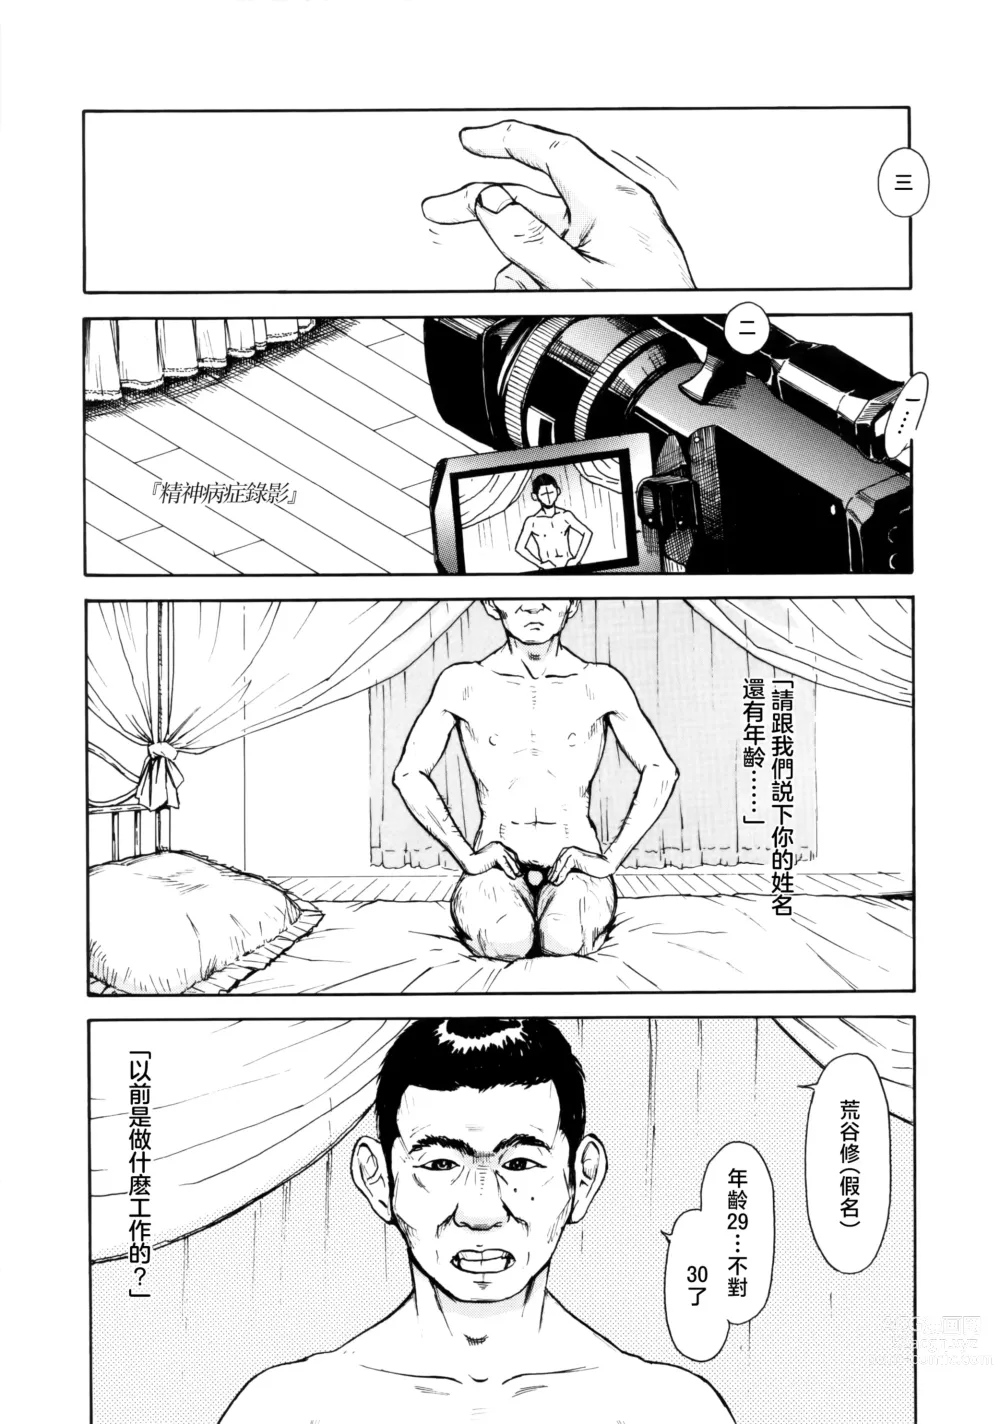 Page 2 of manga Psycho Psycho Douga